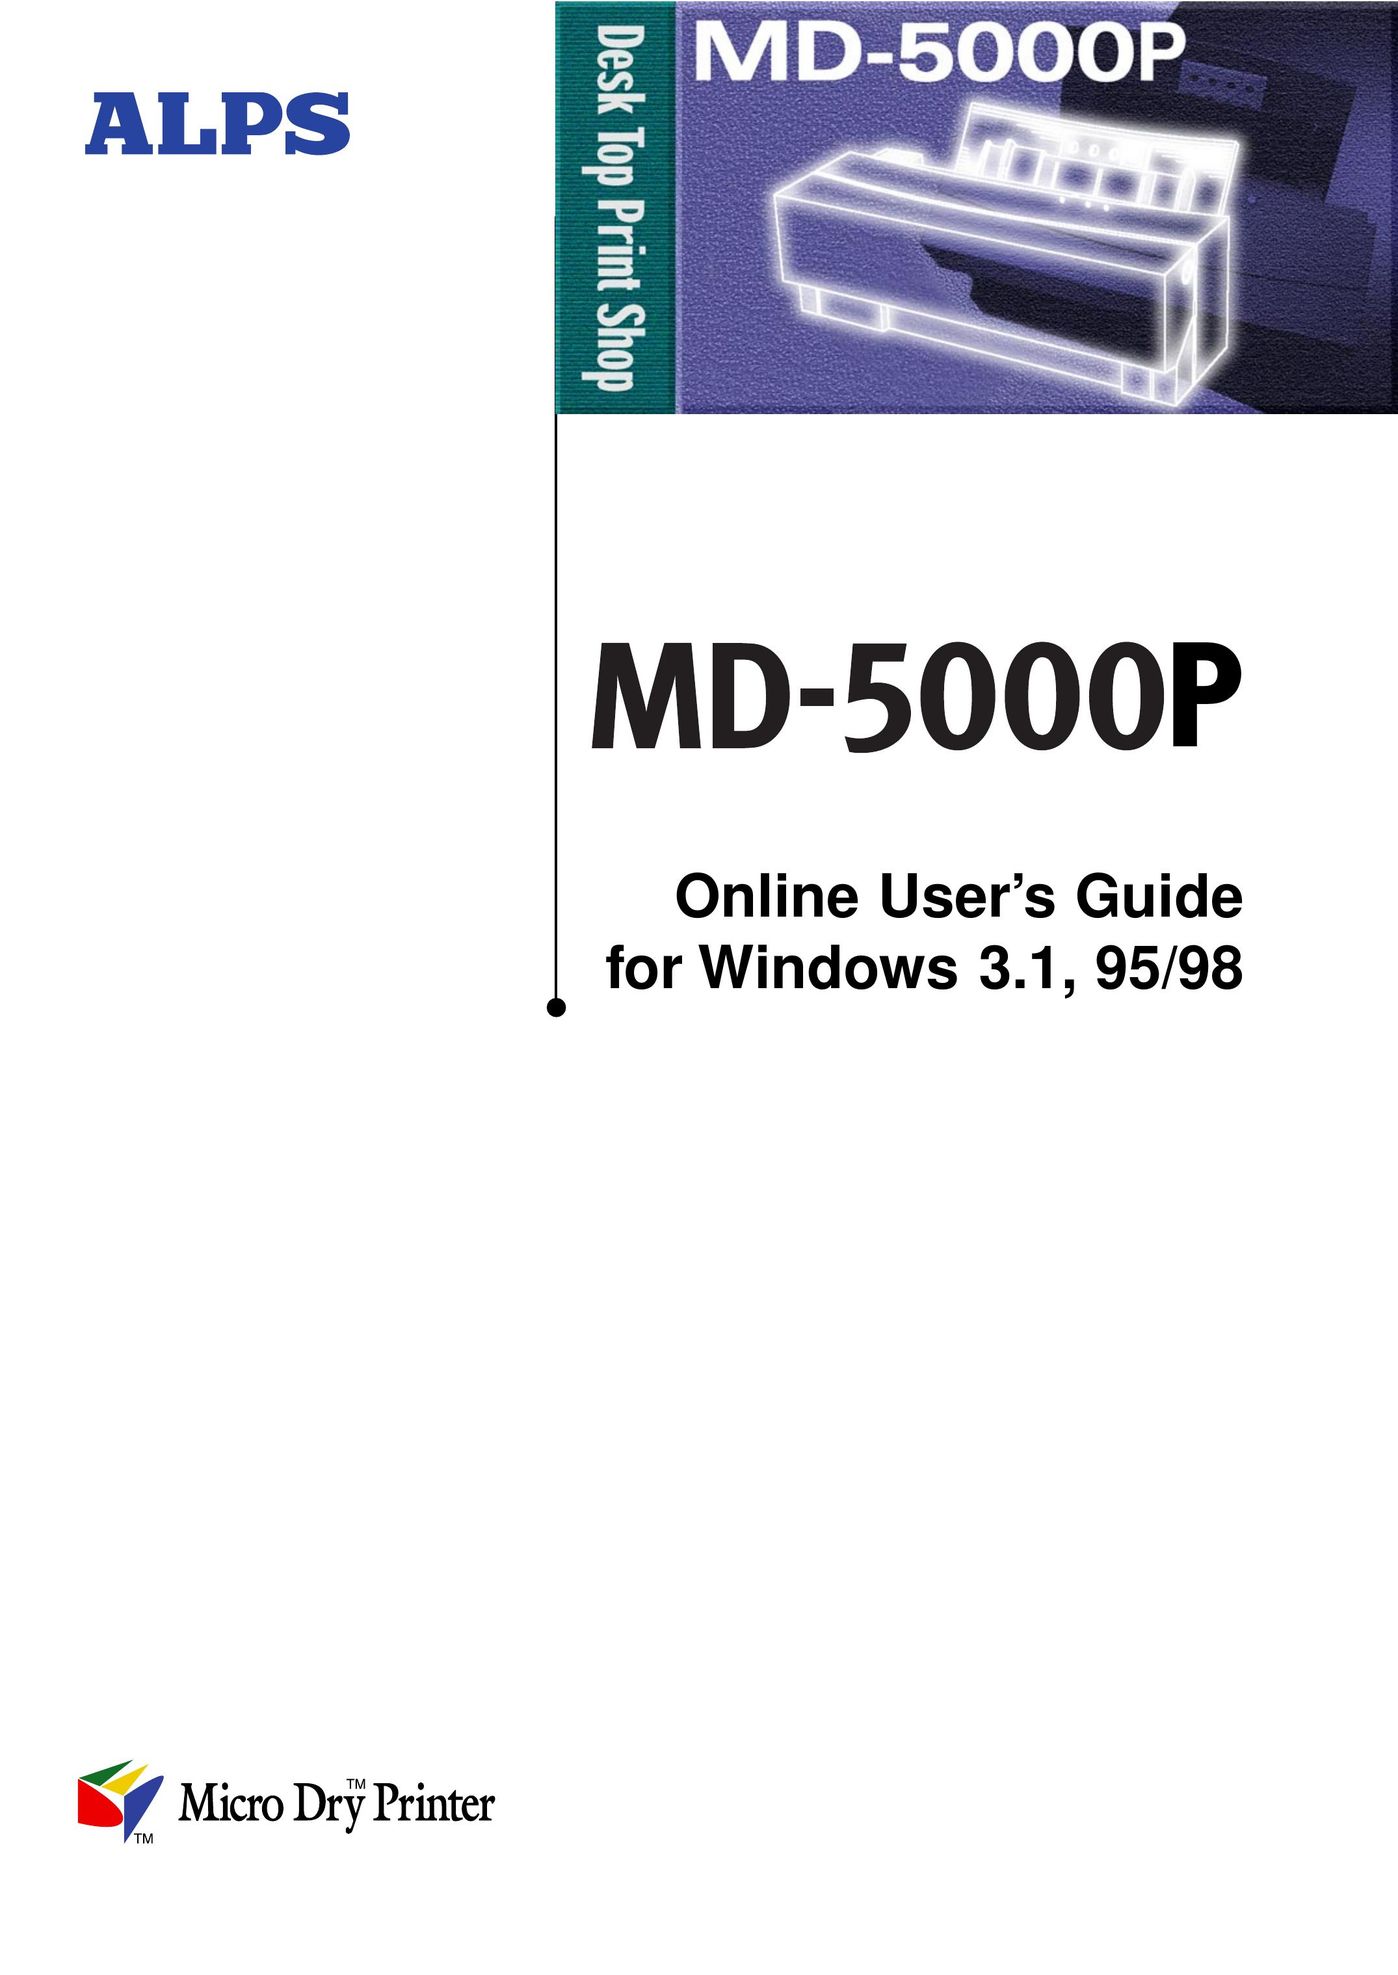 Alps Electric MD-5000P Printer User Manual